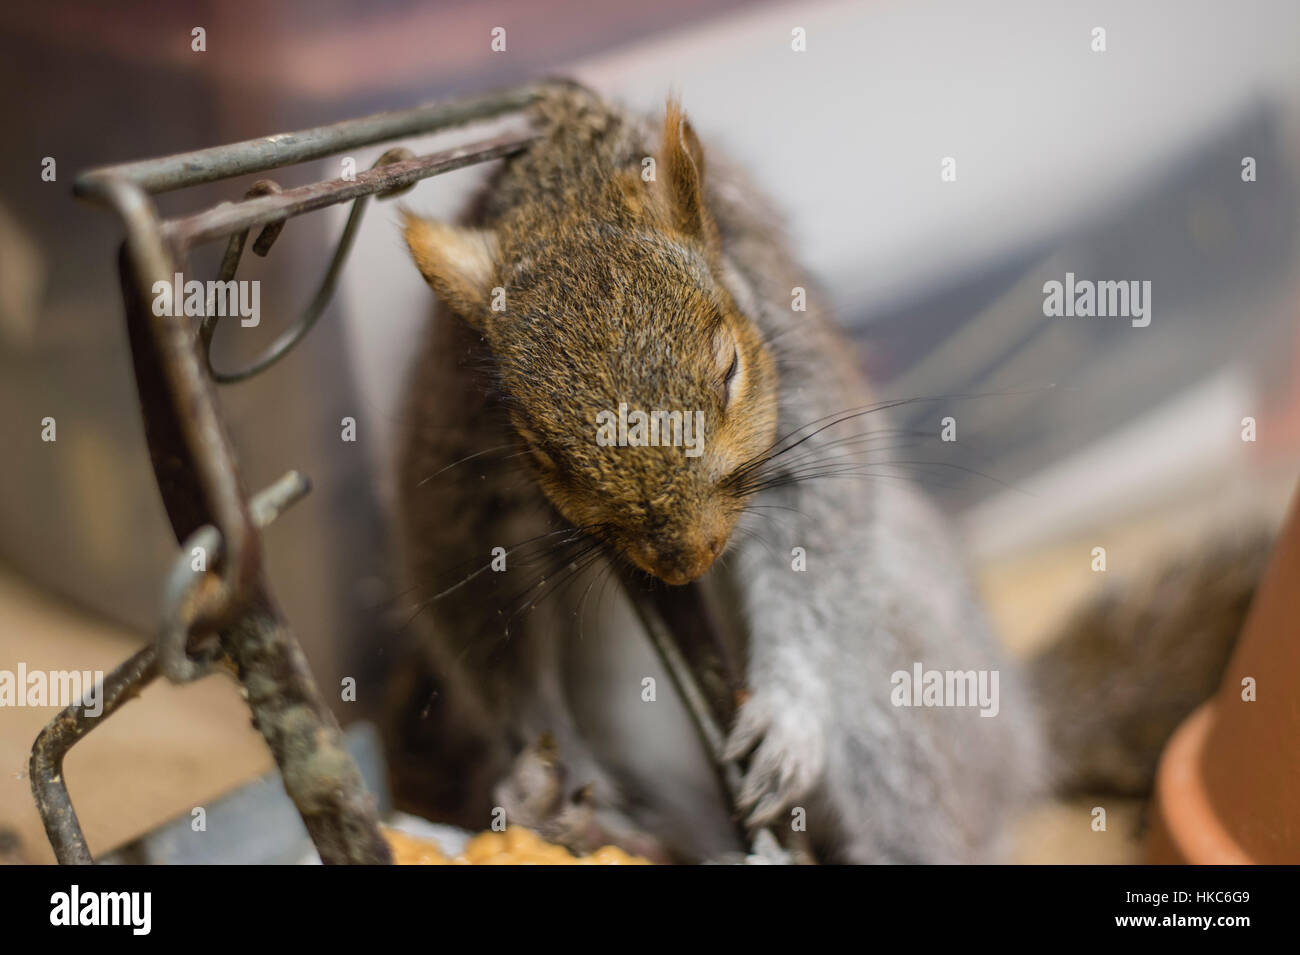 https://c8.alamy.com/comp/HKC6G9/dead-grey-squirrel-caught-in-trap-in-domestic-dwelling-loft-attic-HKC6G9.jpg